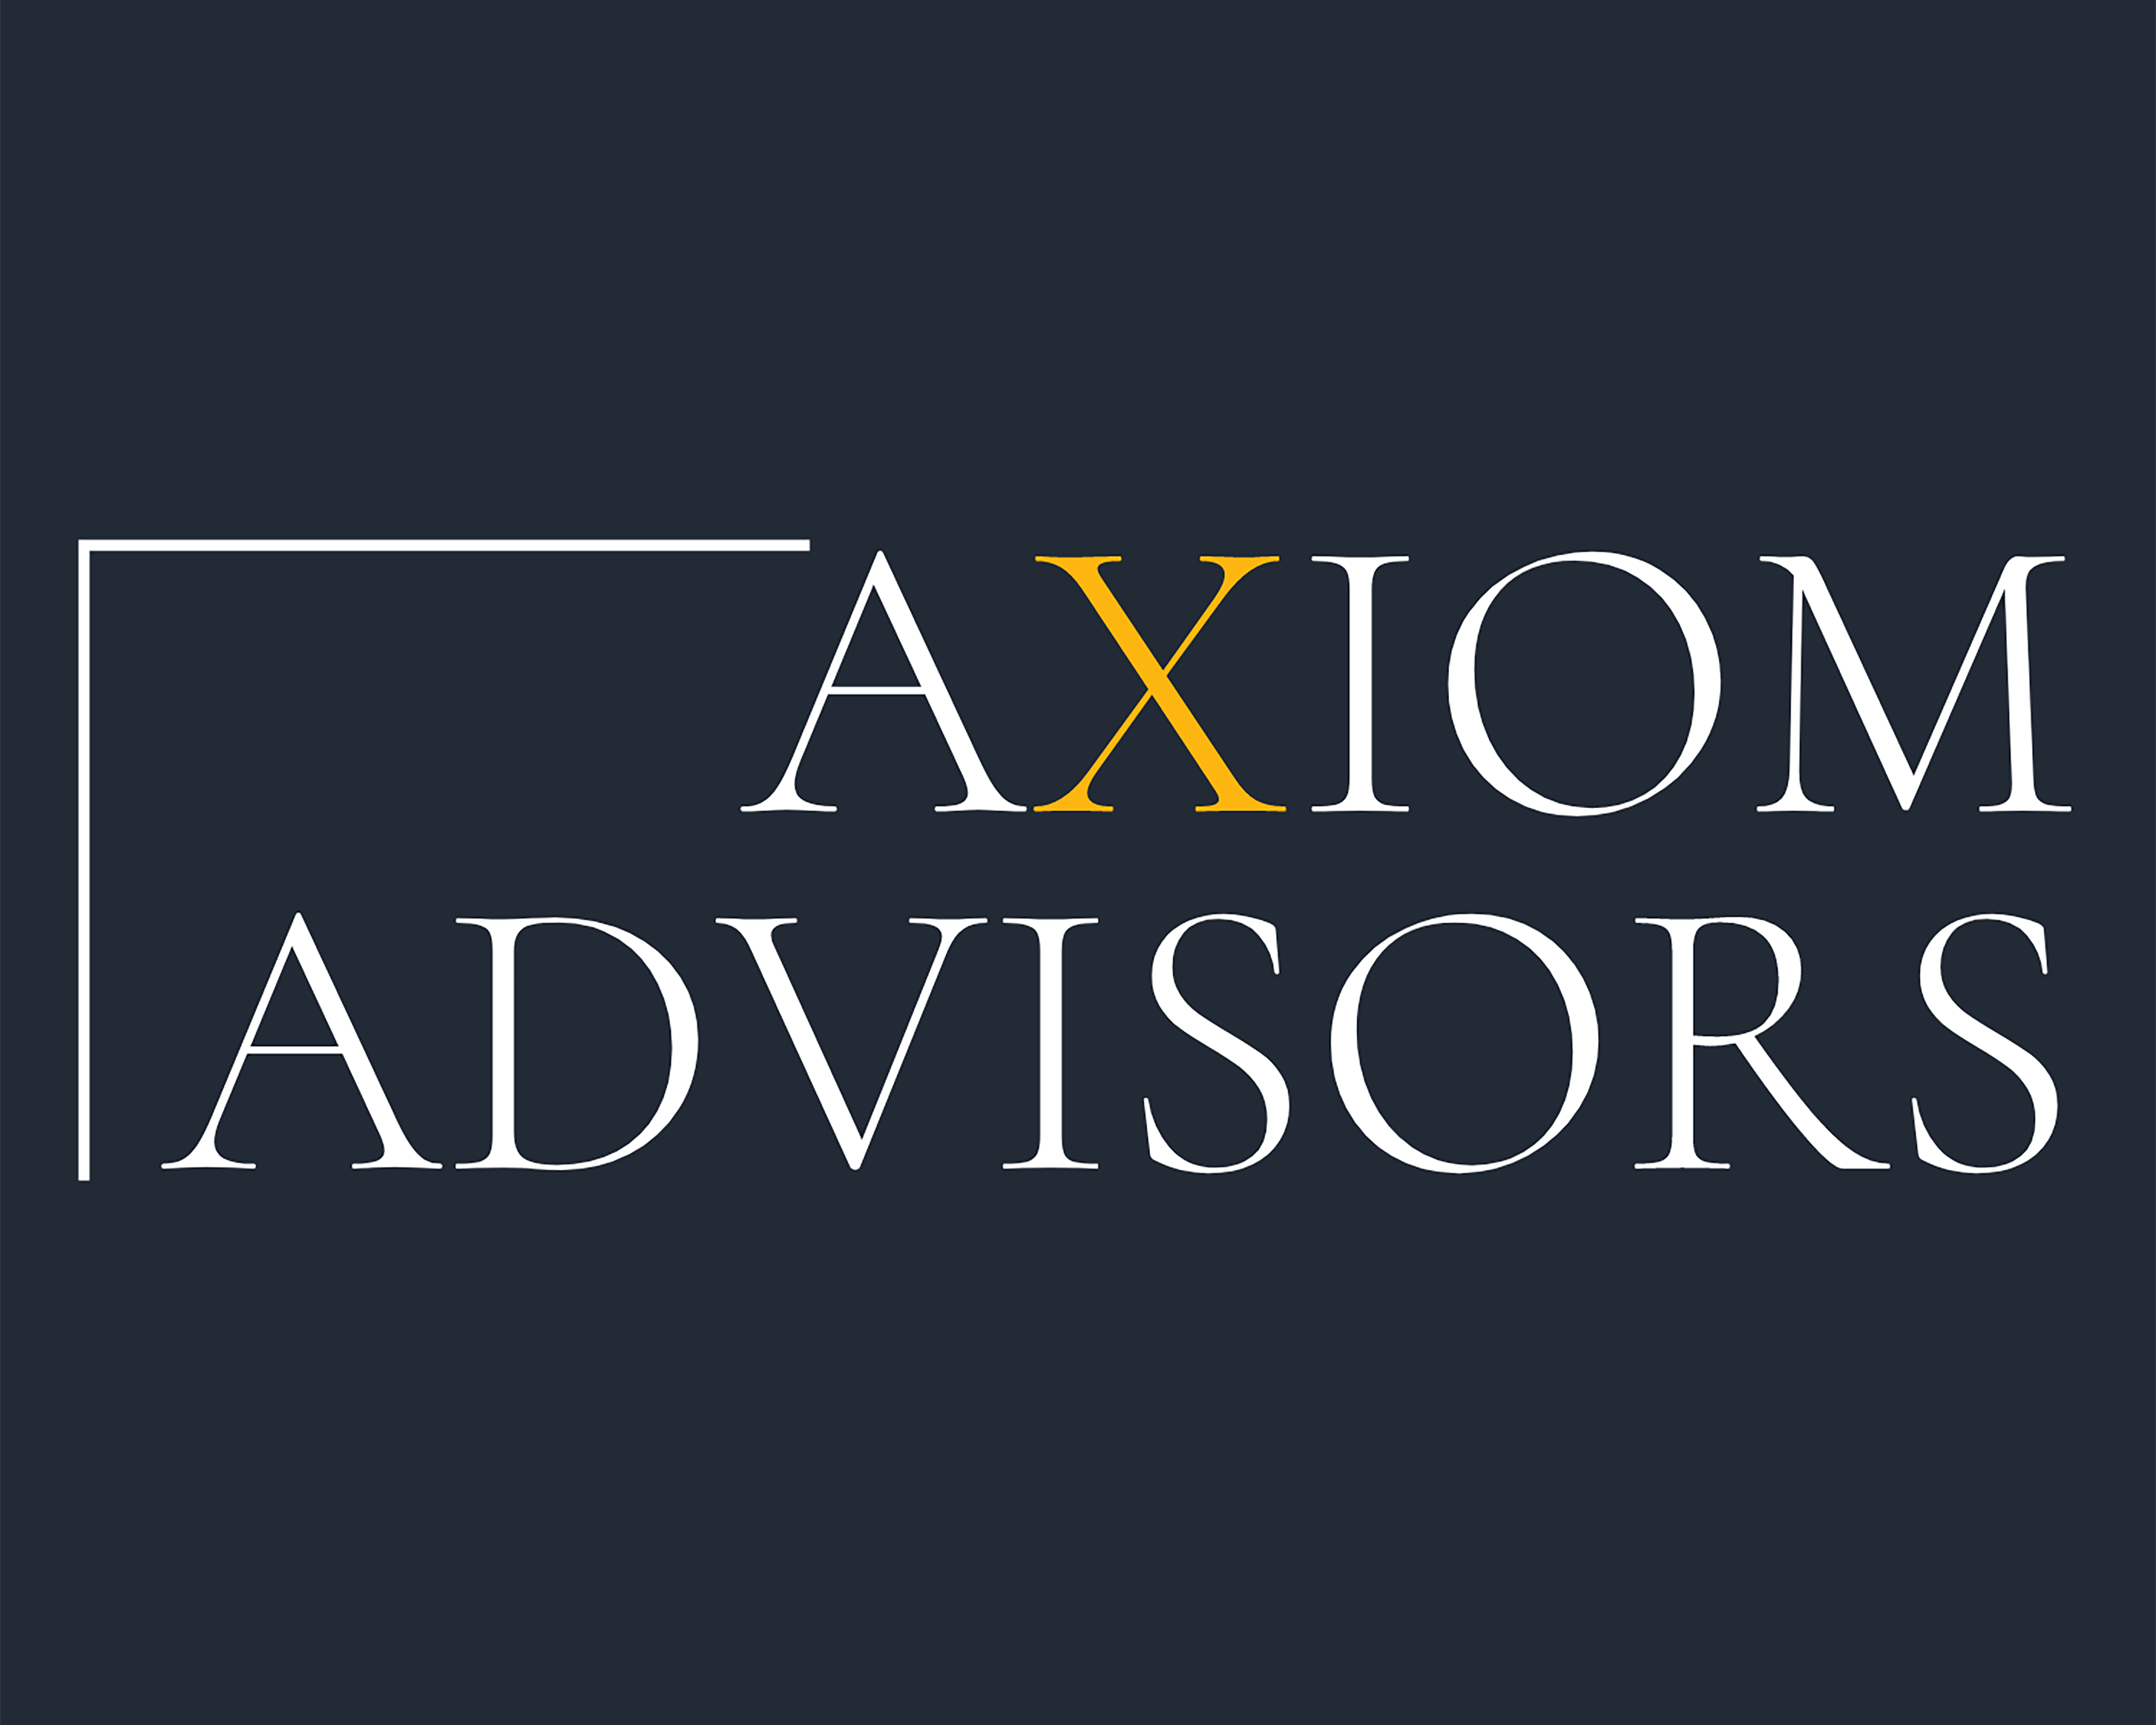 Axiom Advisors